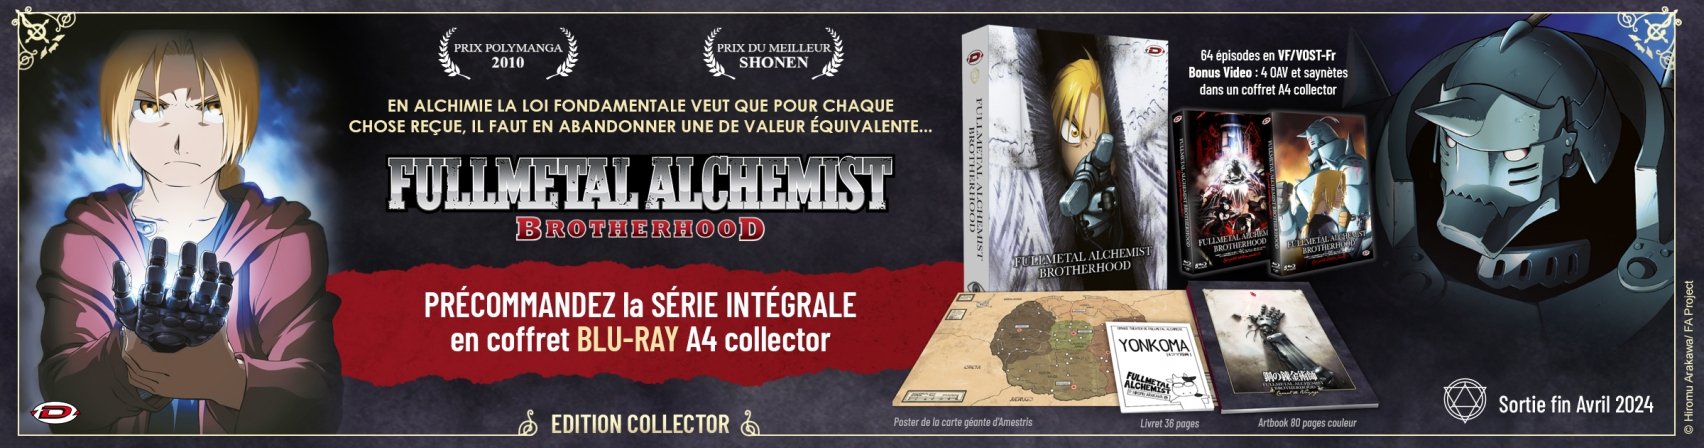 Prcommandez Fullmetal Alchemist Brotherhood en coffret Blu-ray collector